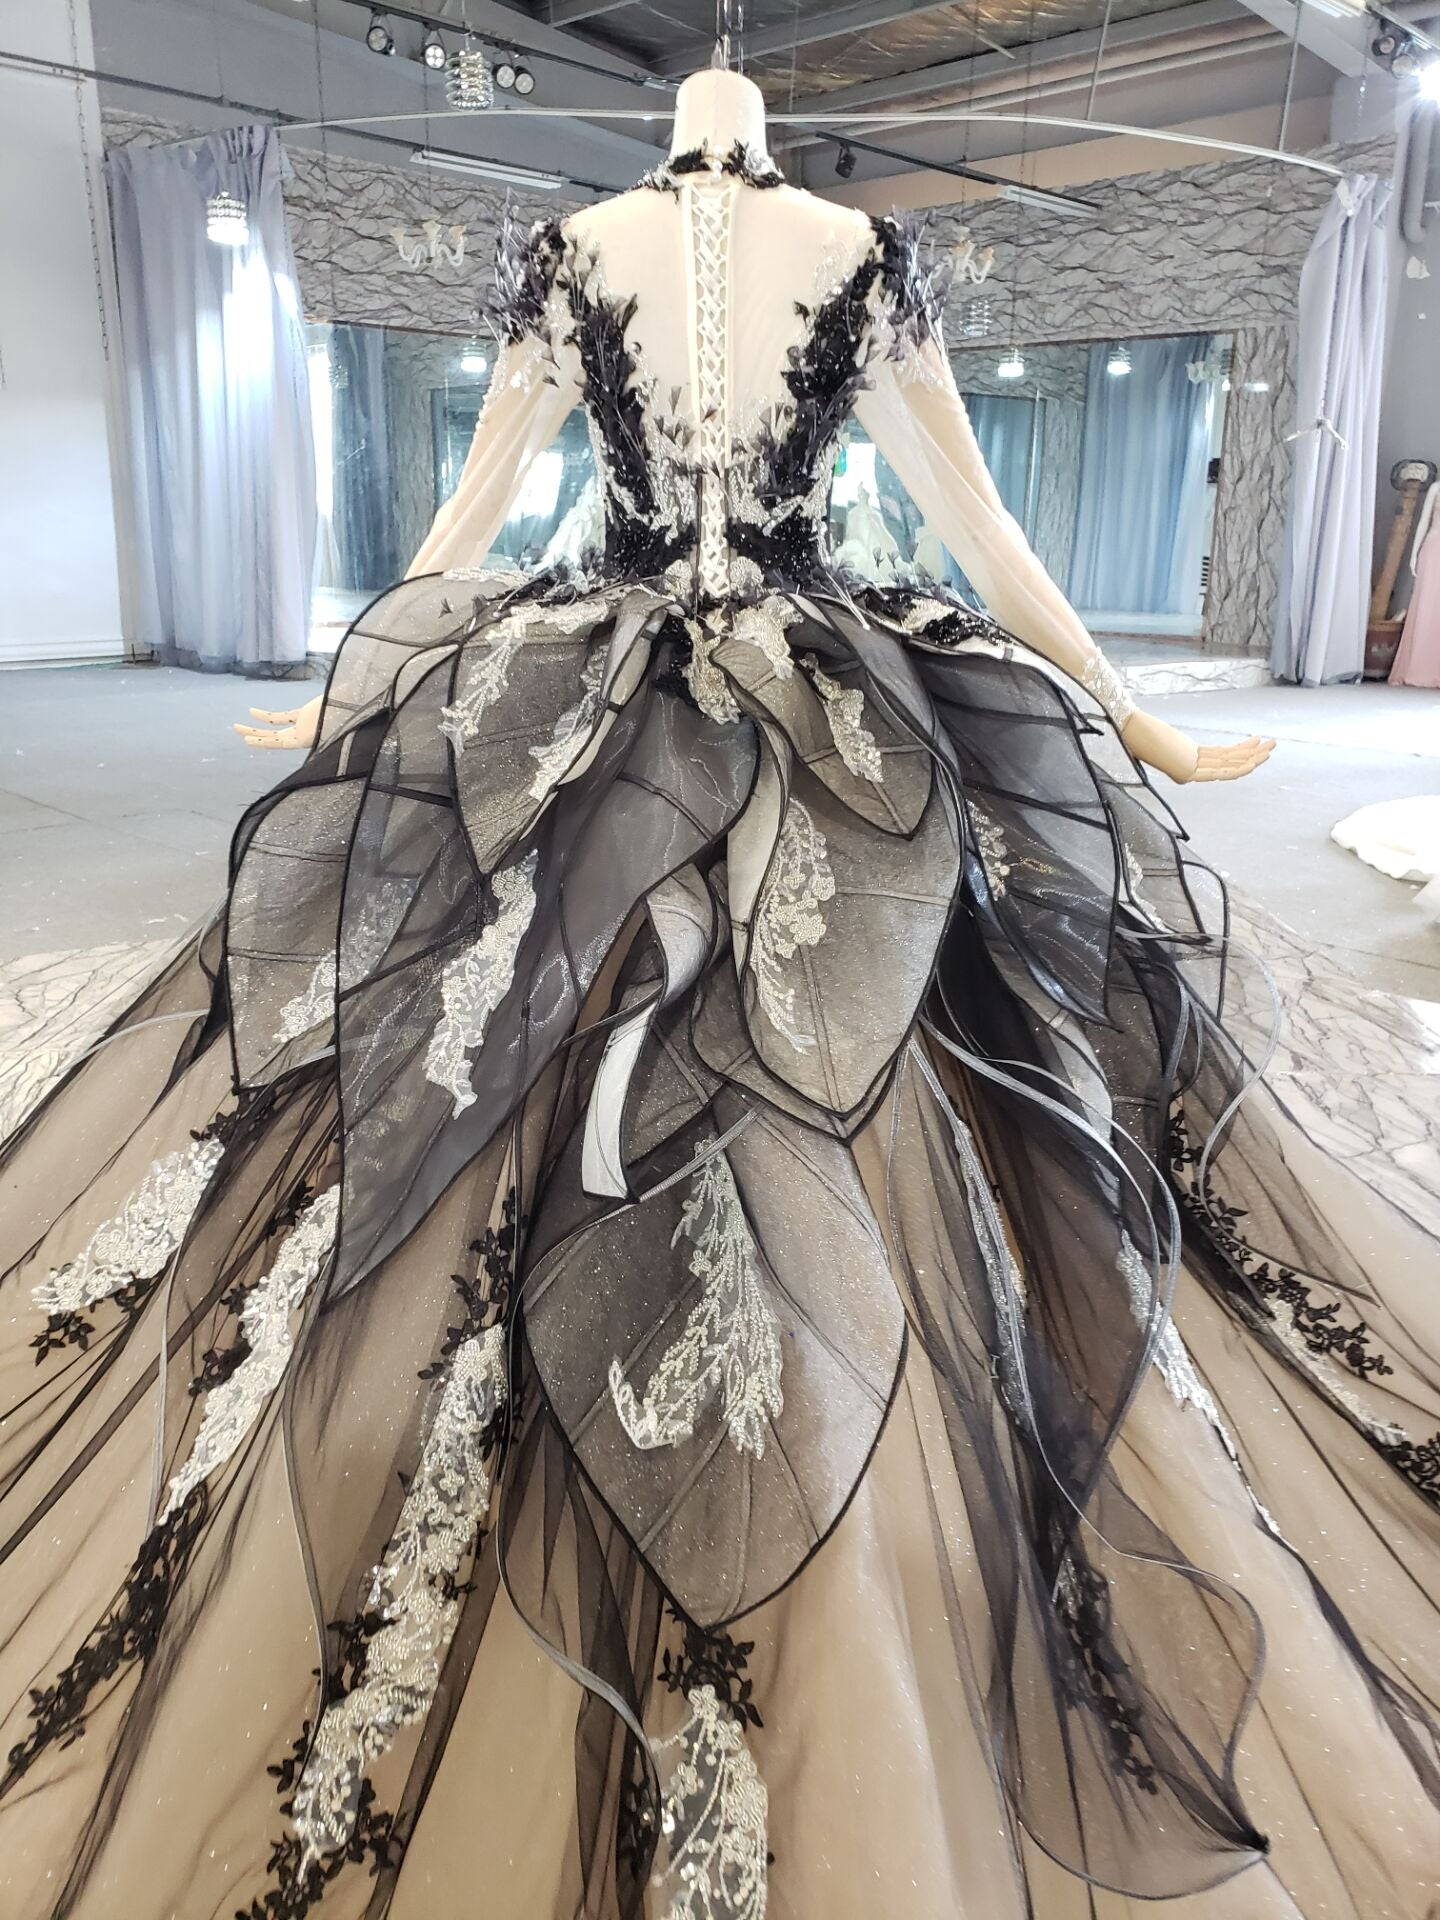 Wedding Dress Designers — Ivory & Beau